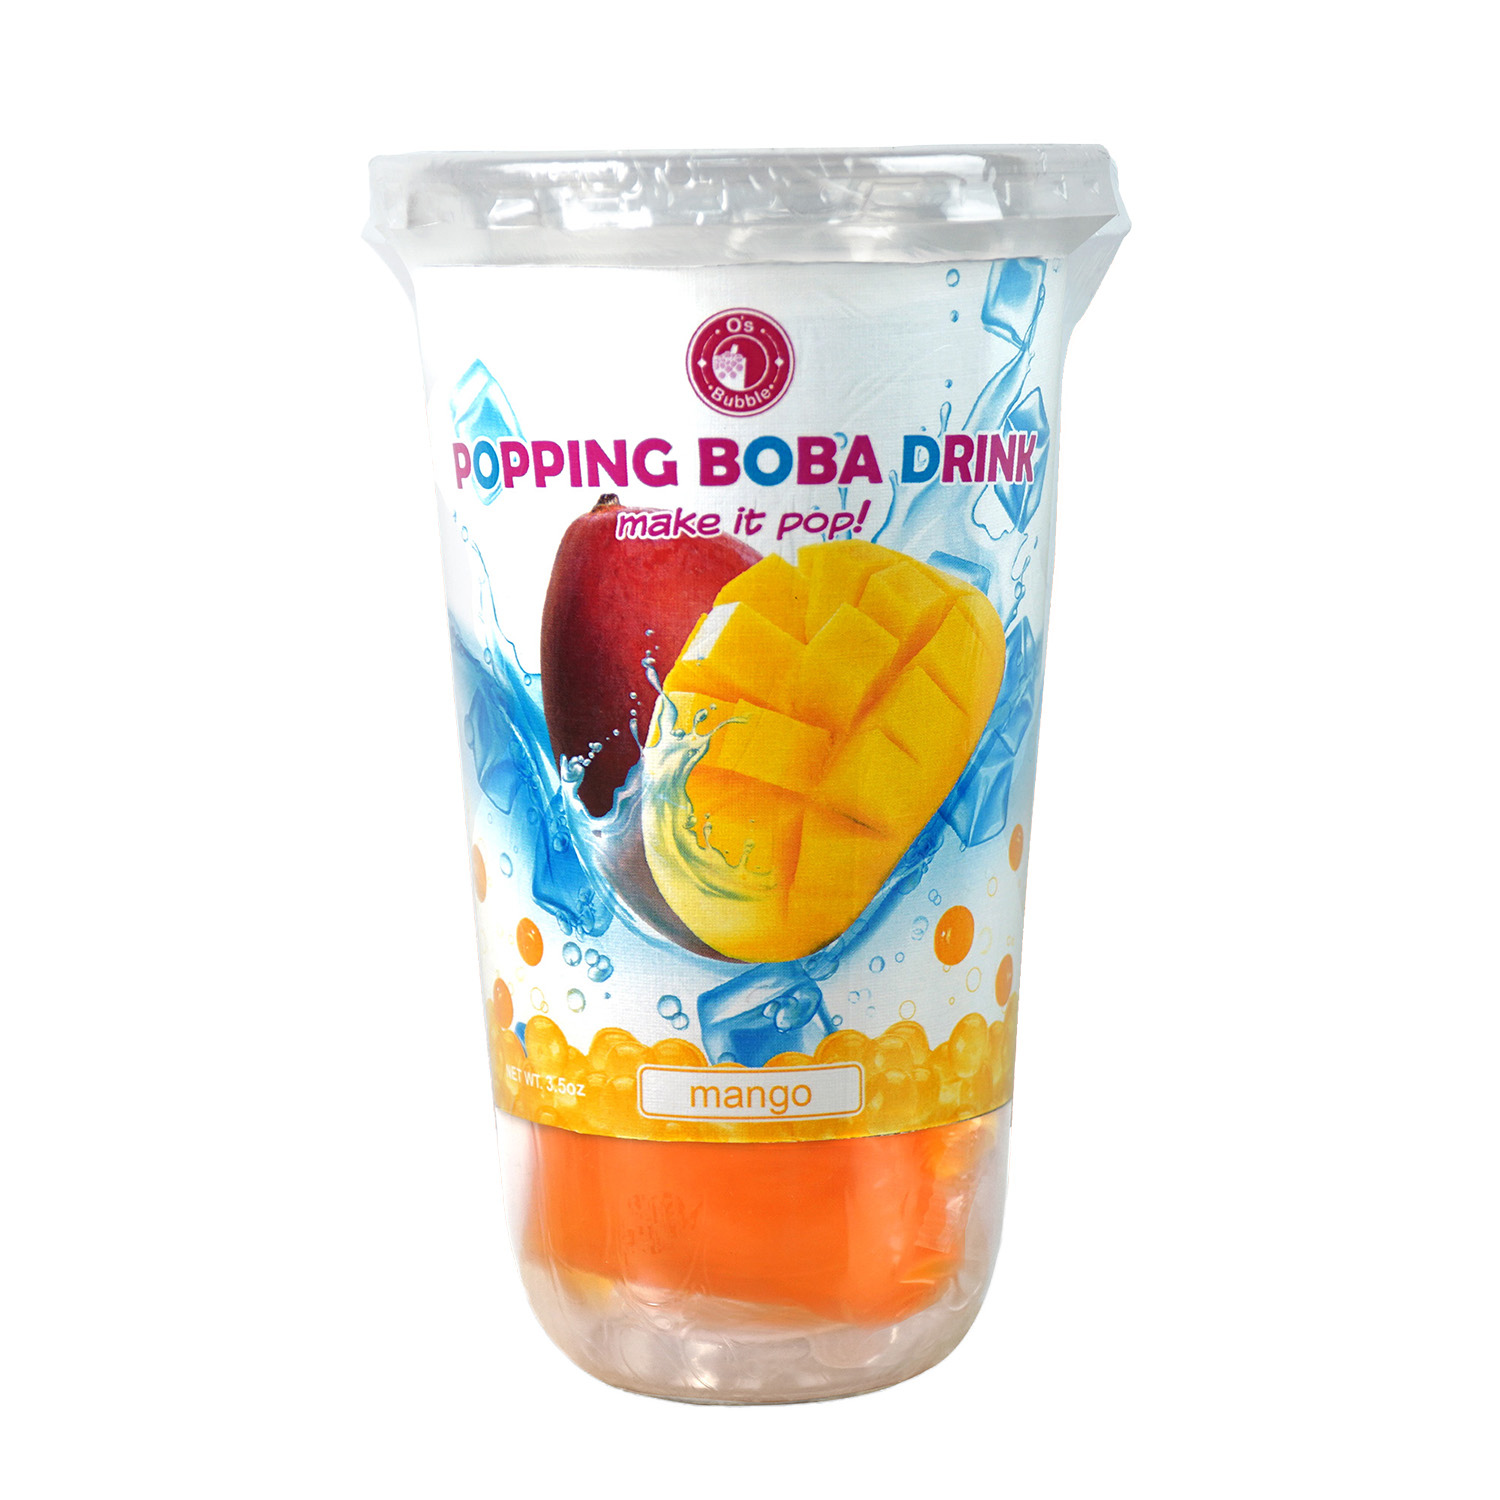 https://www.osbubble.com/wp-content/uploads/2021/01/popping-boba-cup-mango.jpg